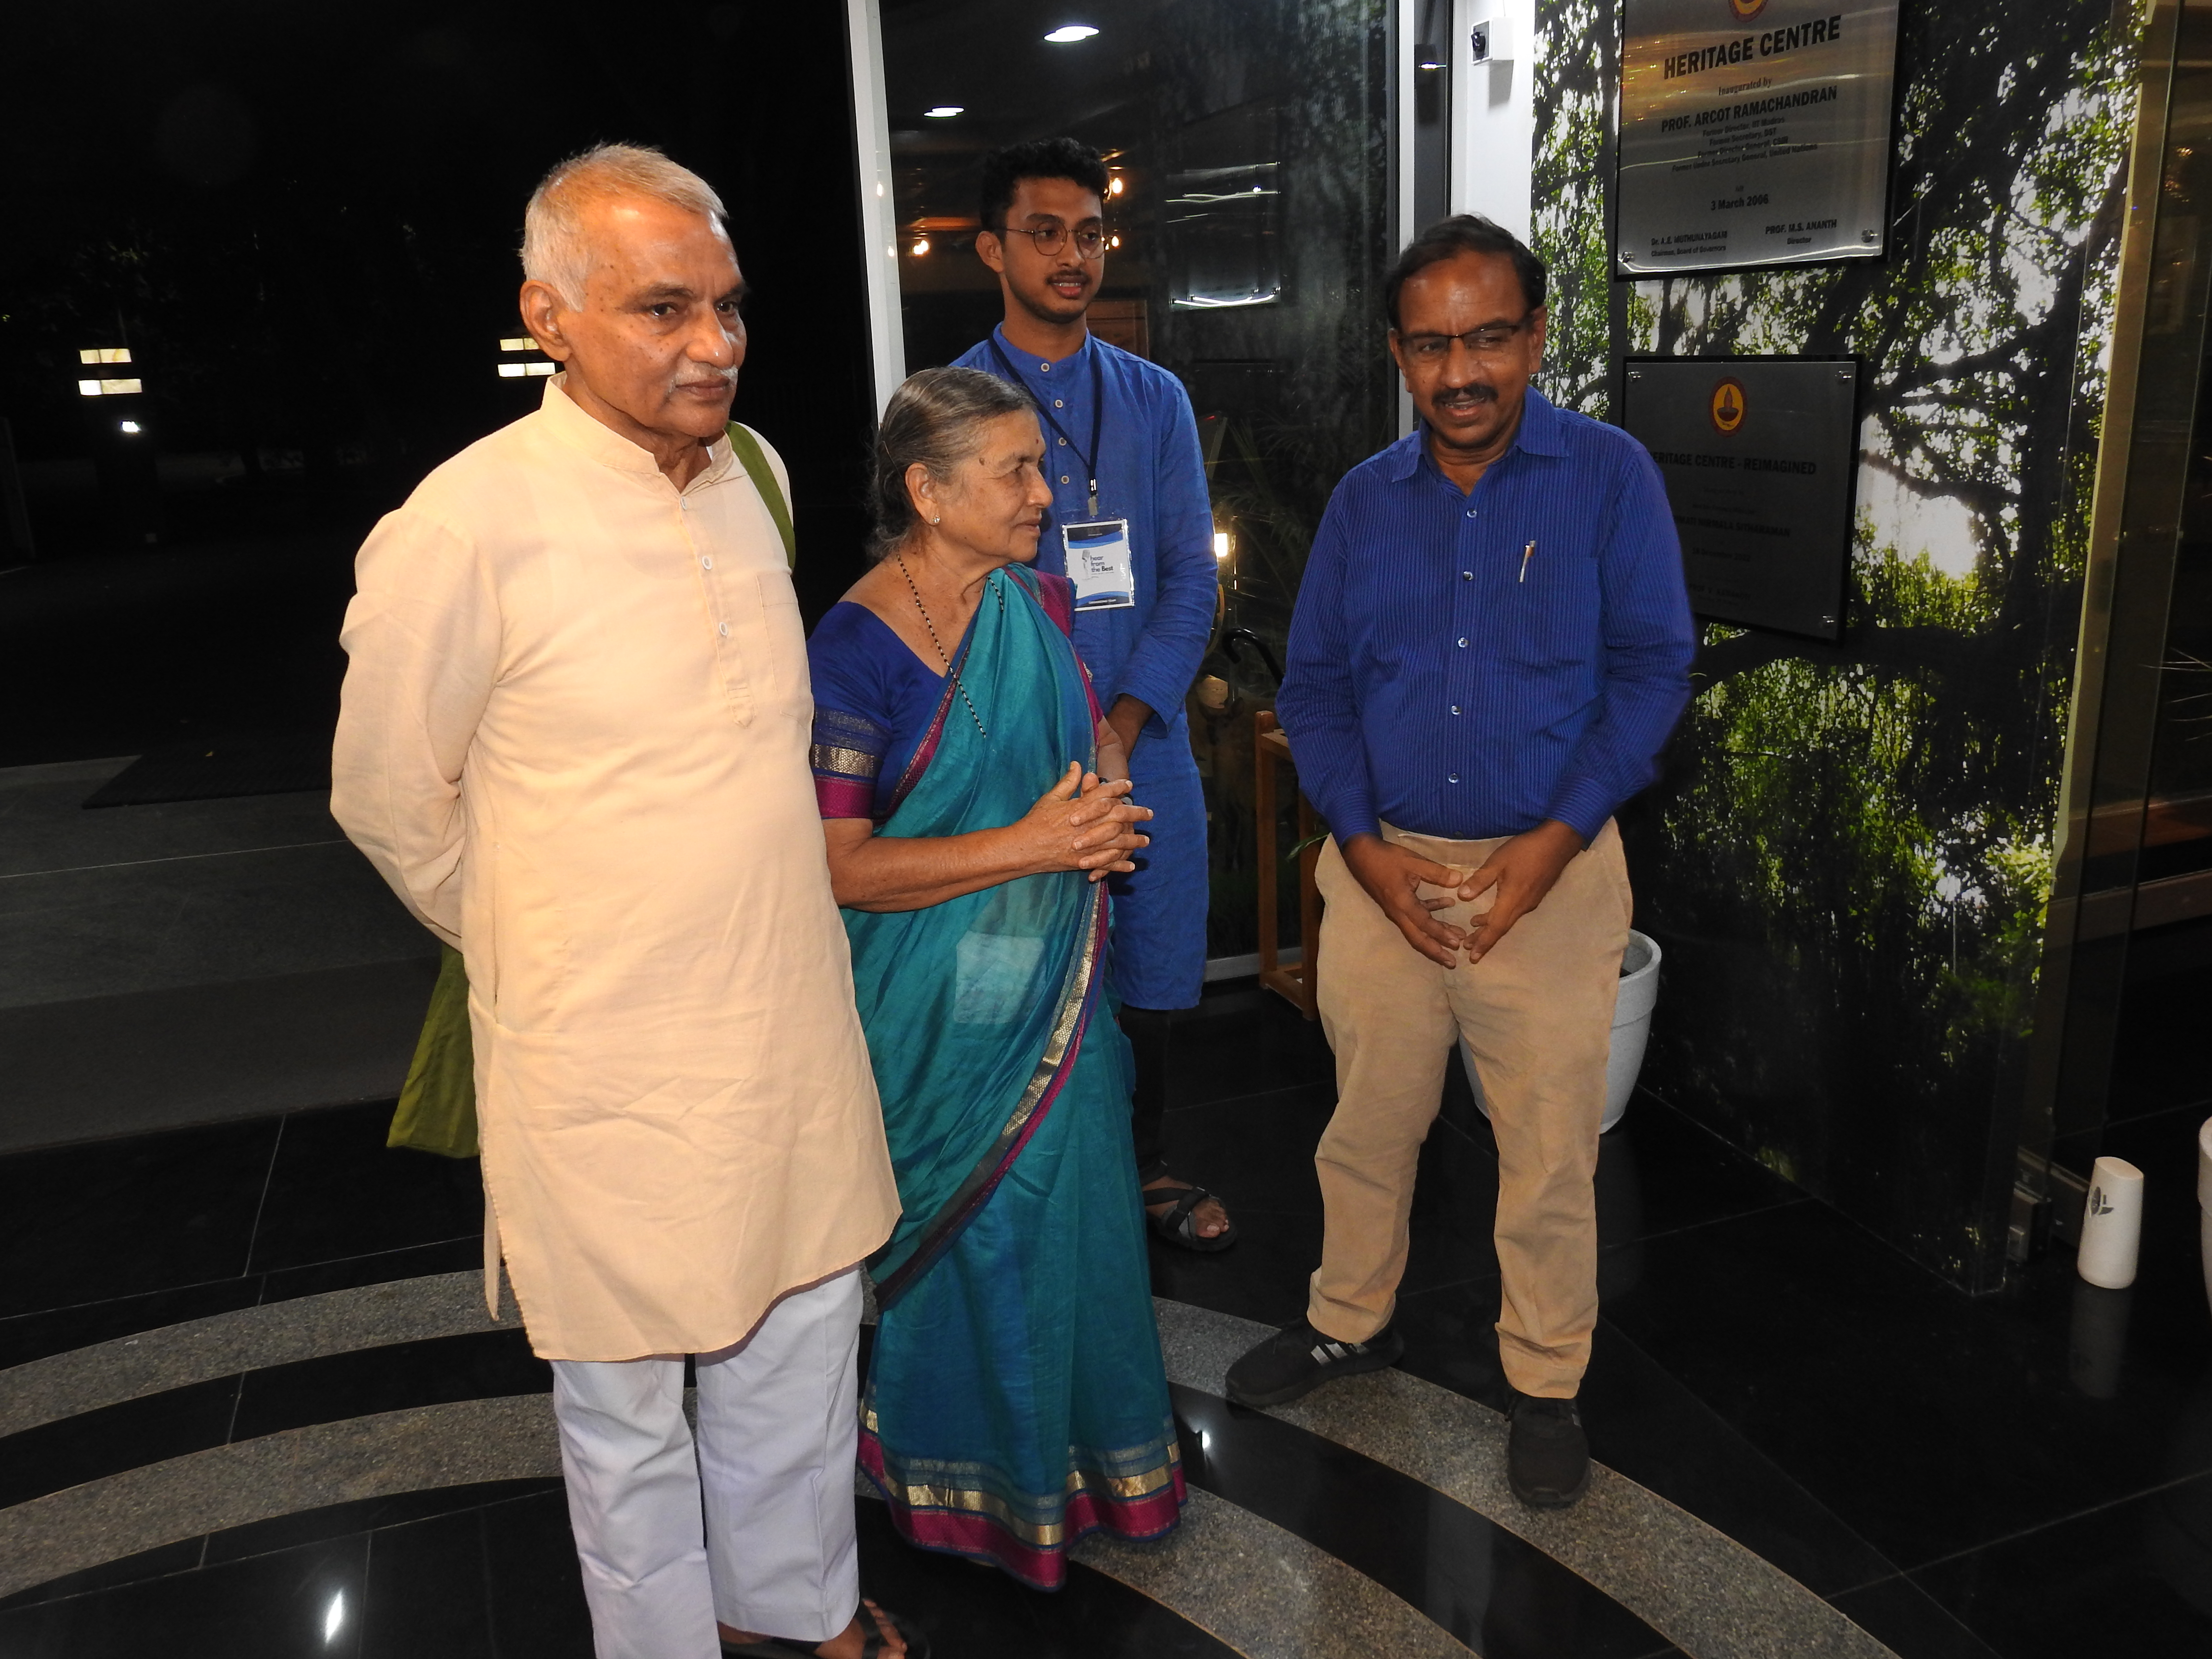 Mr. Kumaran Sathasivam (Operational Head of Heritage Centre) welcomes the visitors